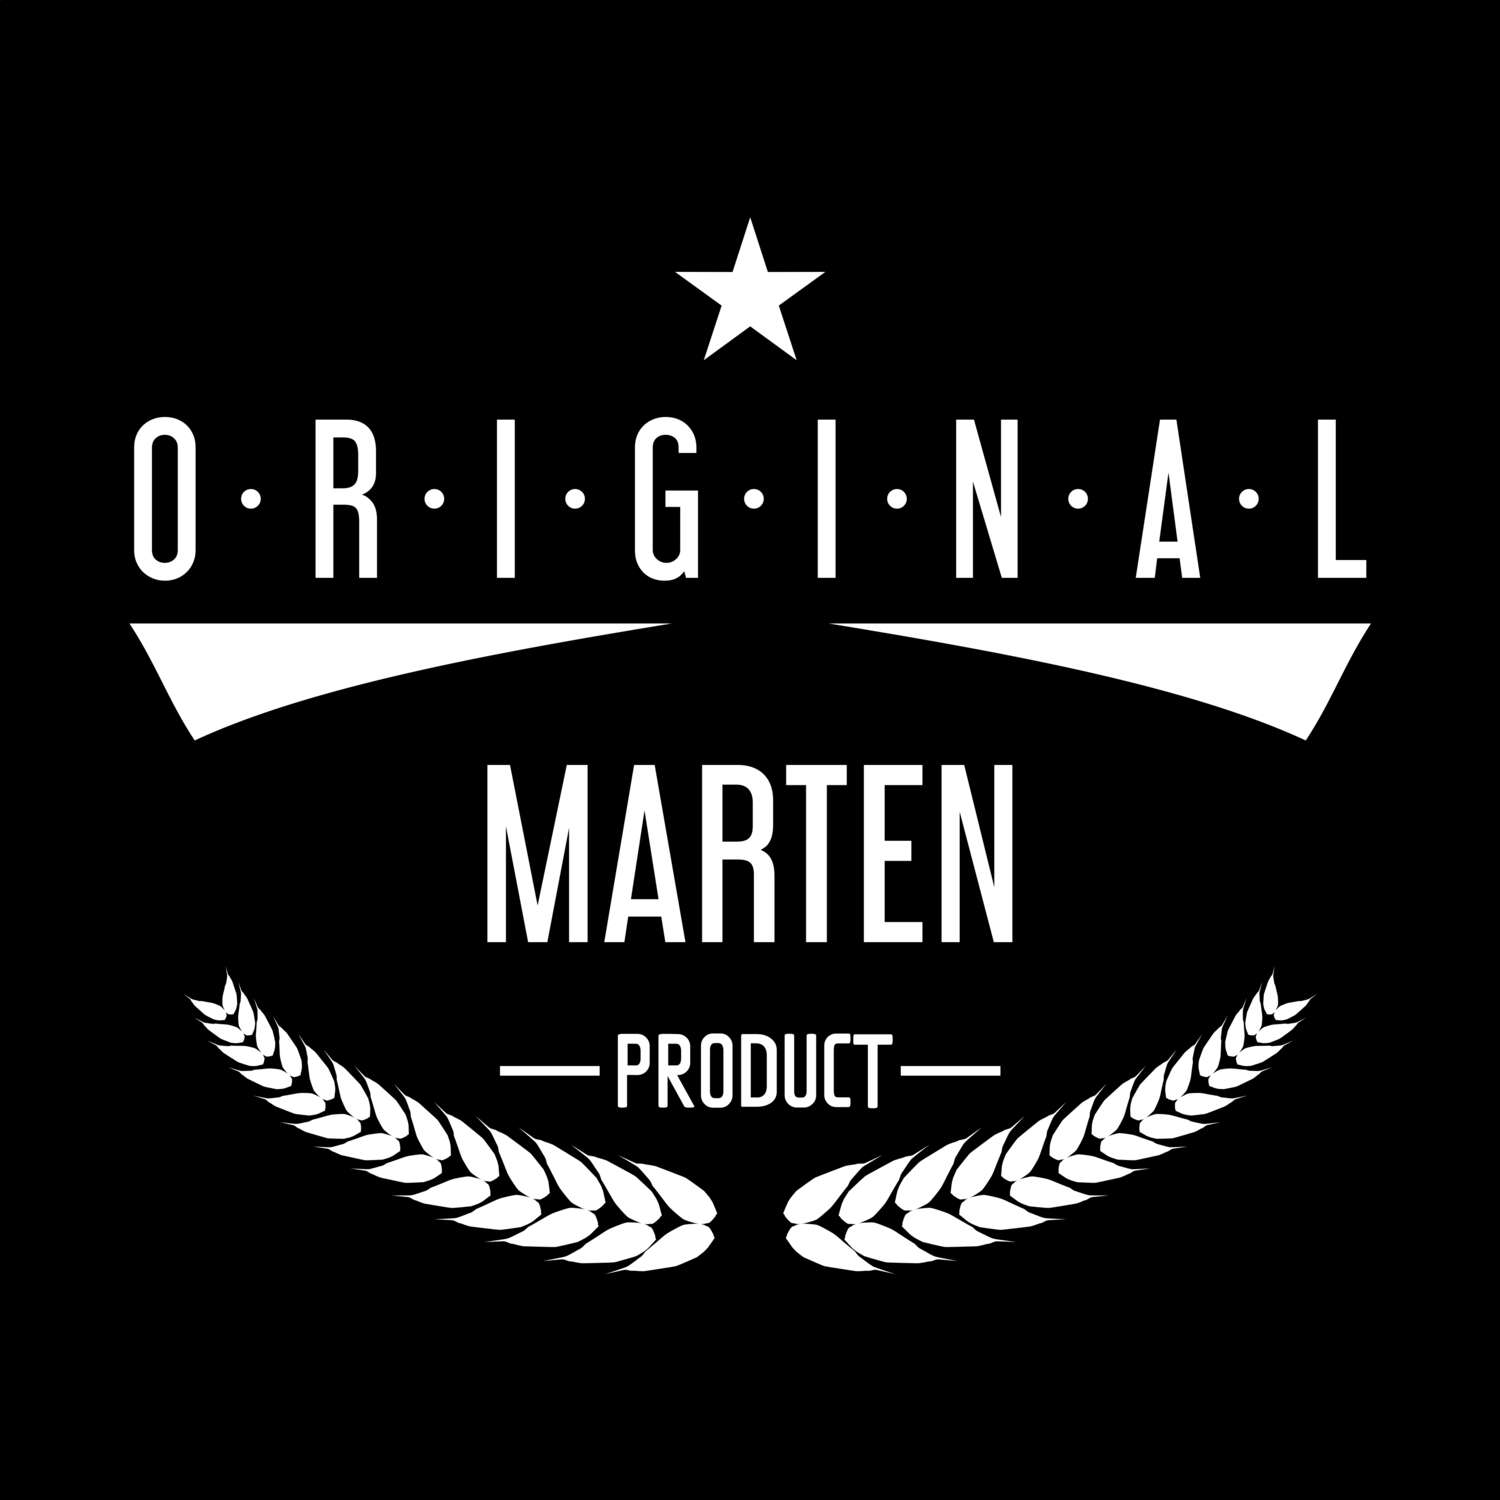 Marten T-Shirt »Original Product«